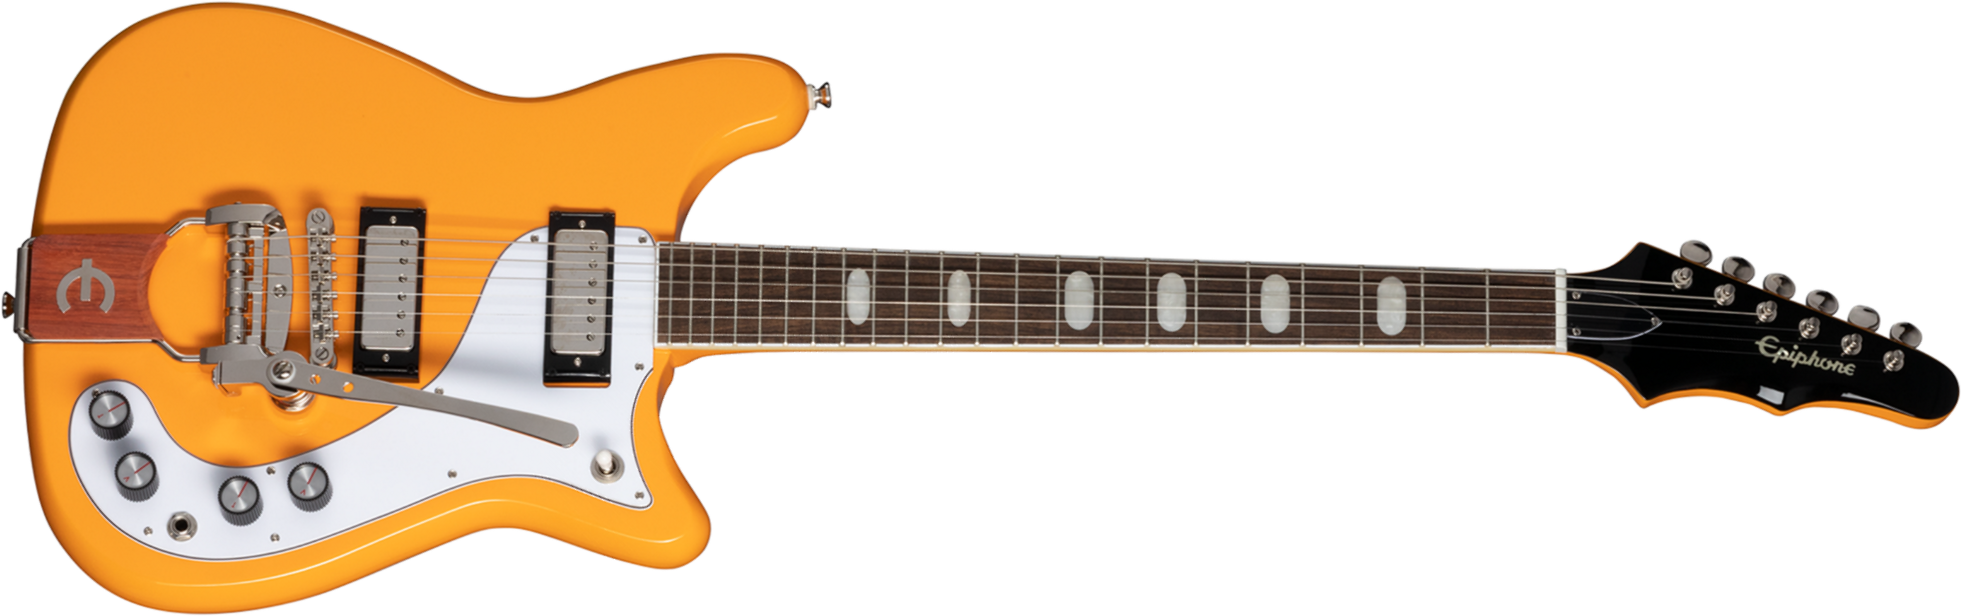 Epiphone Crestwood 150th Anniversary 2h Ht Lau - California Coral - Semi-hollow electric guitar - Main picture